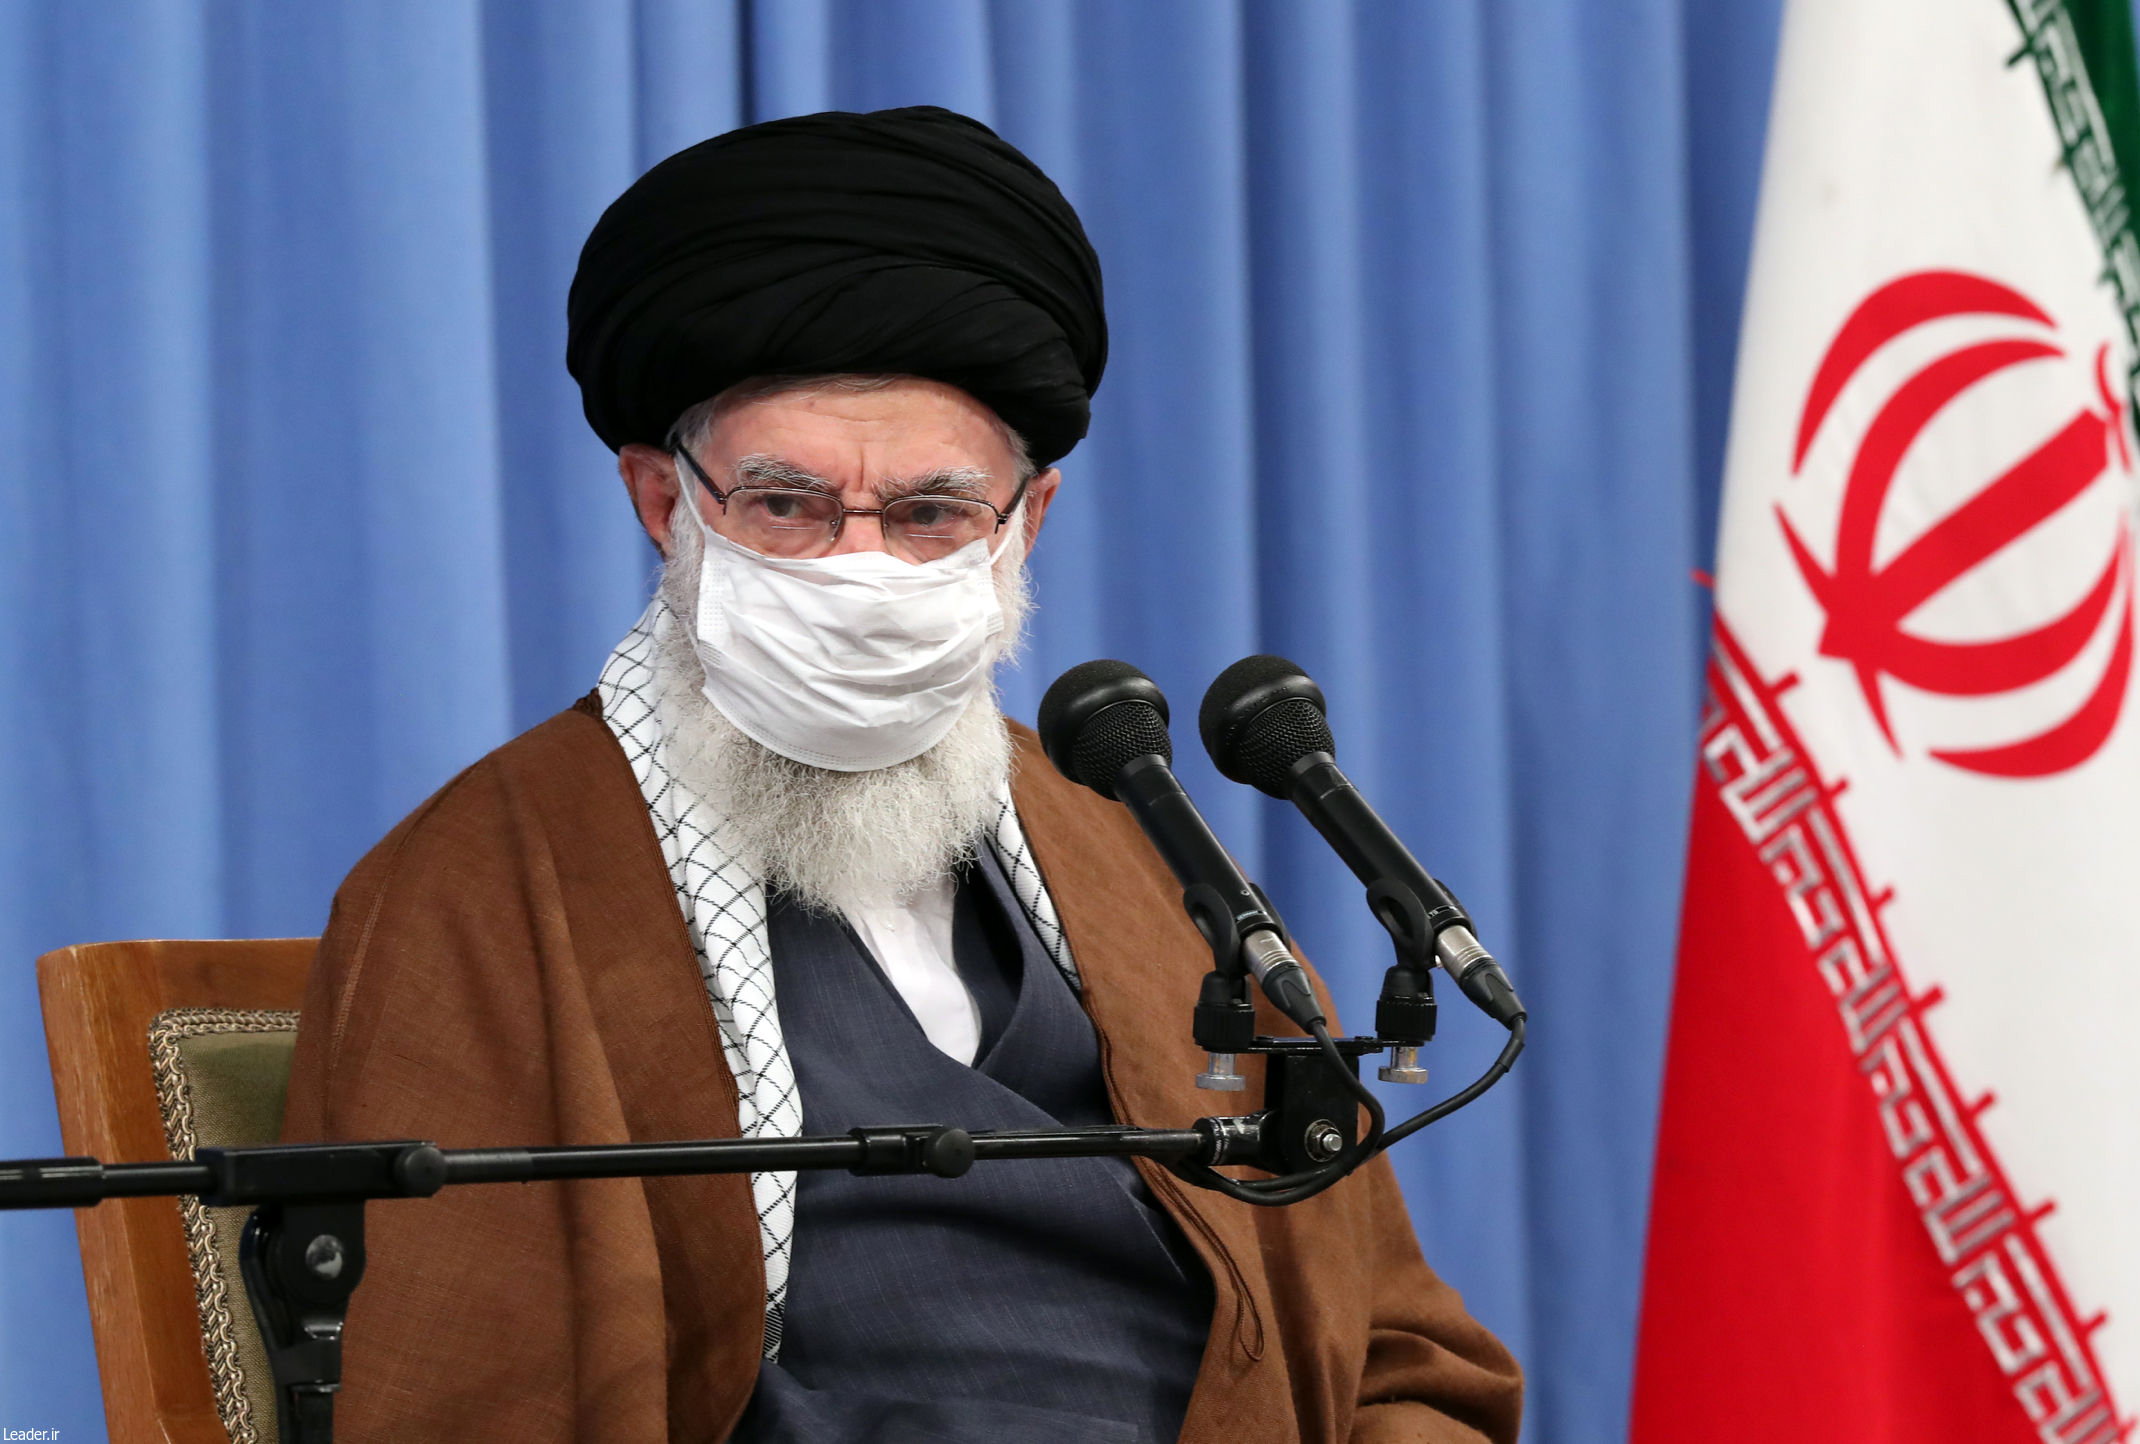 Iran Supreme Leader Ayatollah Ali Khamenei wears a protective face mask as he gives a speech in Tehran on Oct. 24. (KHAMENEI.IR/AFP via Getty Images)